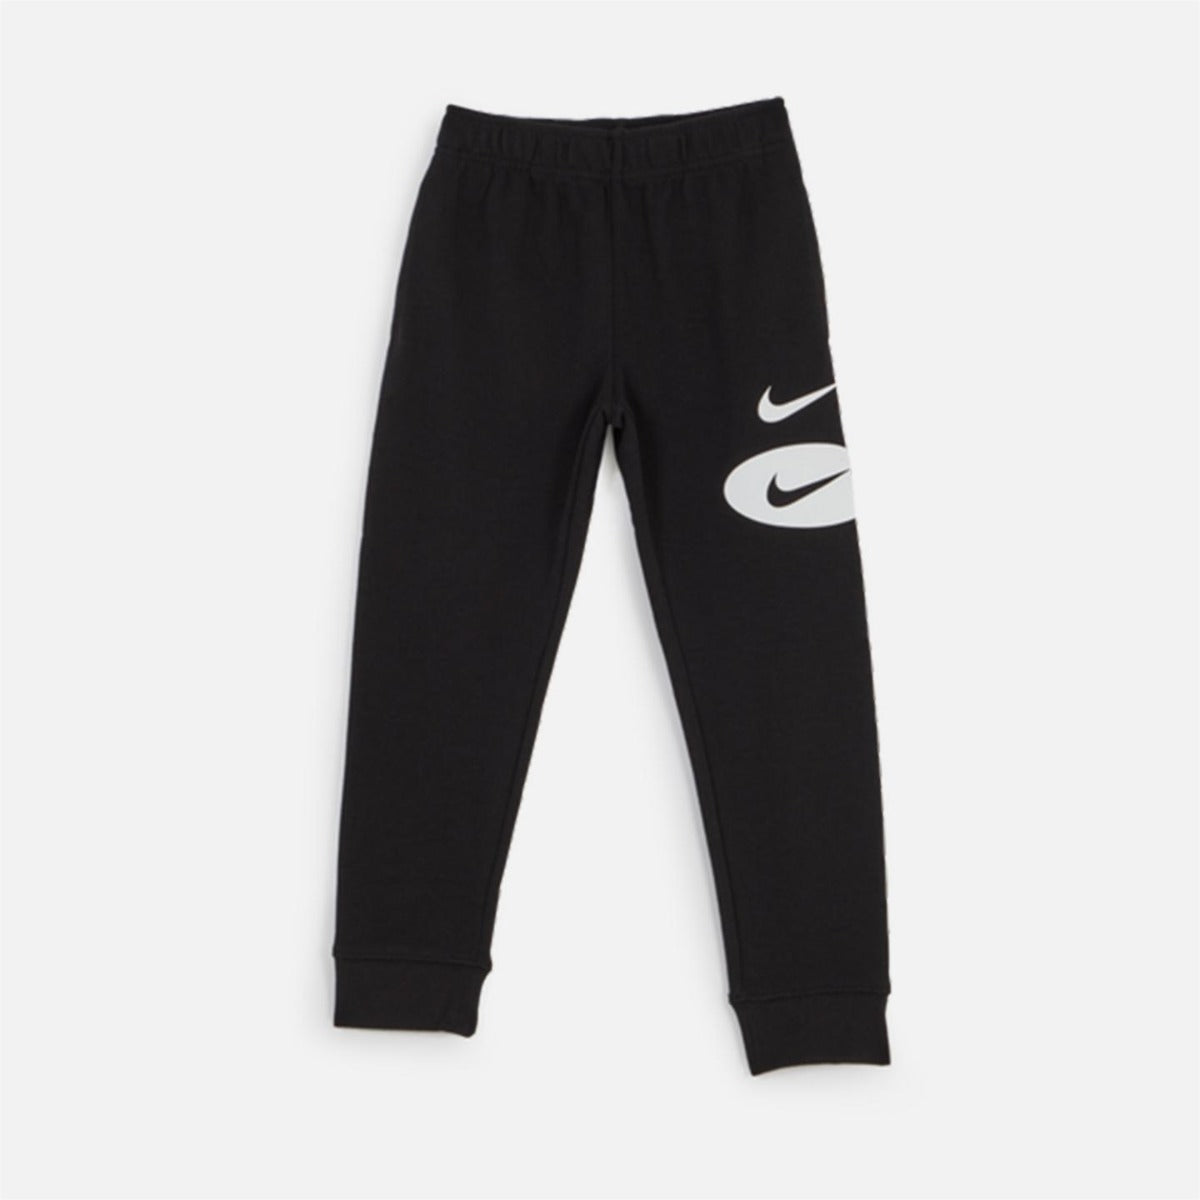 Pantaloni Nike Sportswear Bambini - Neri/Bianchi